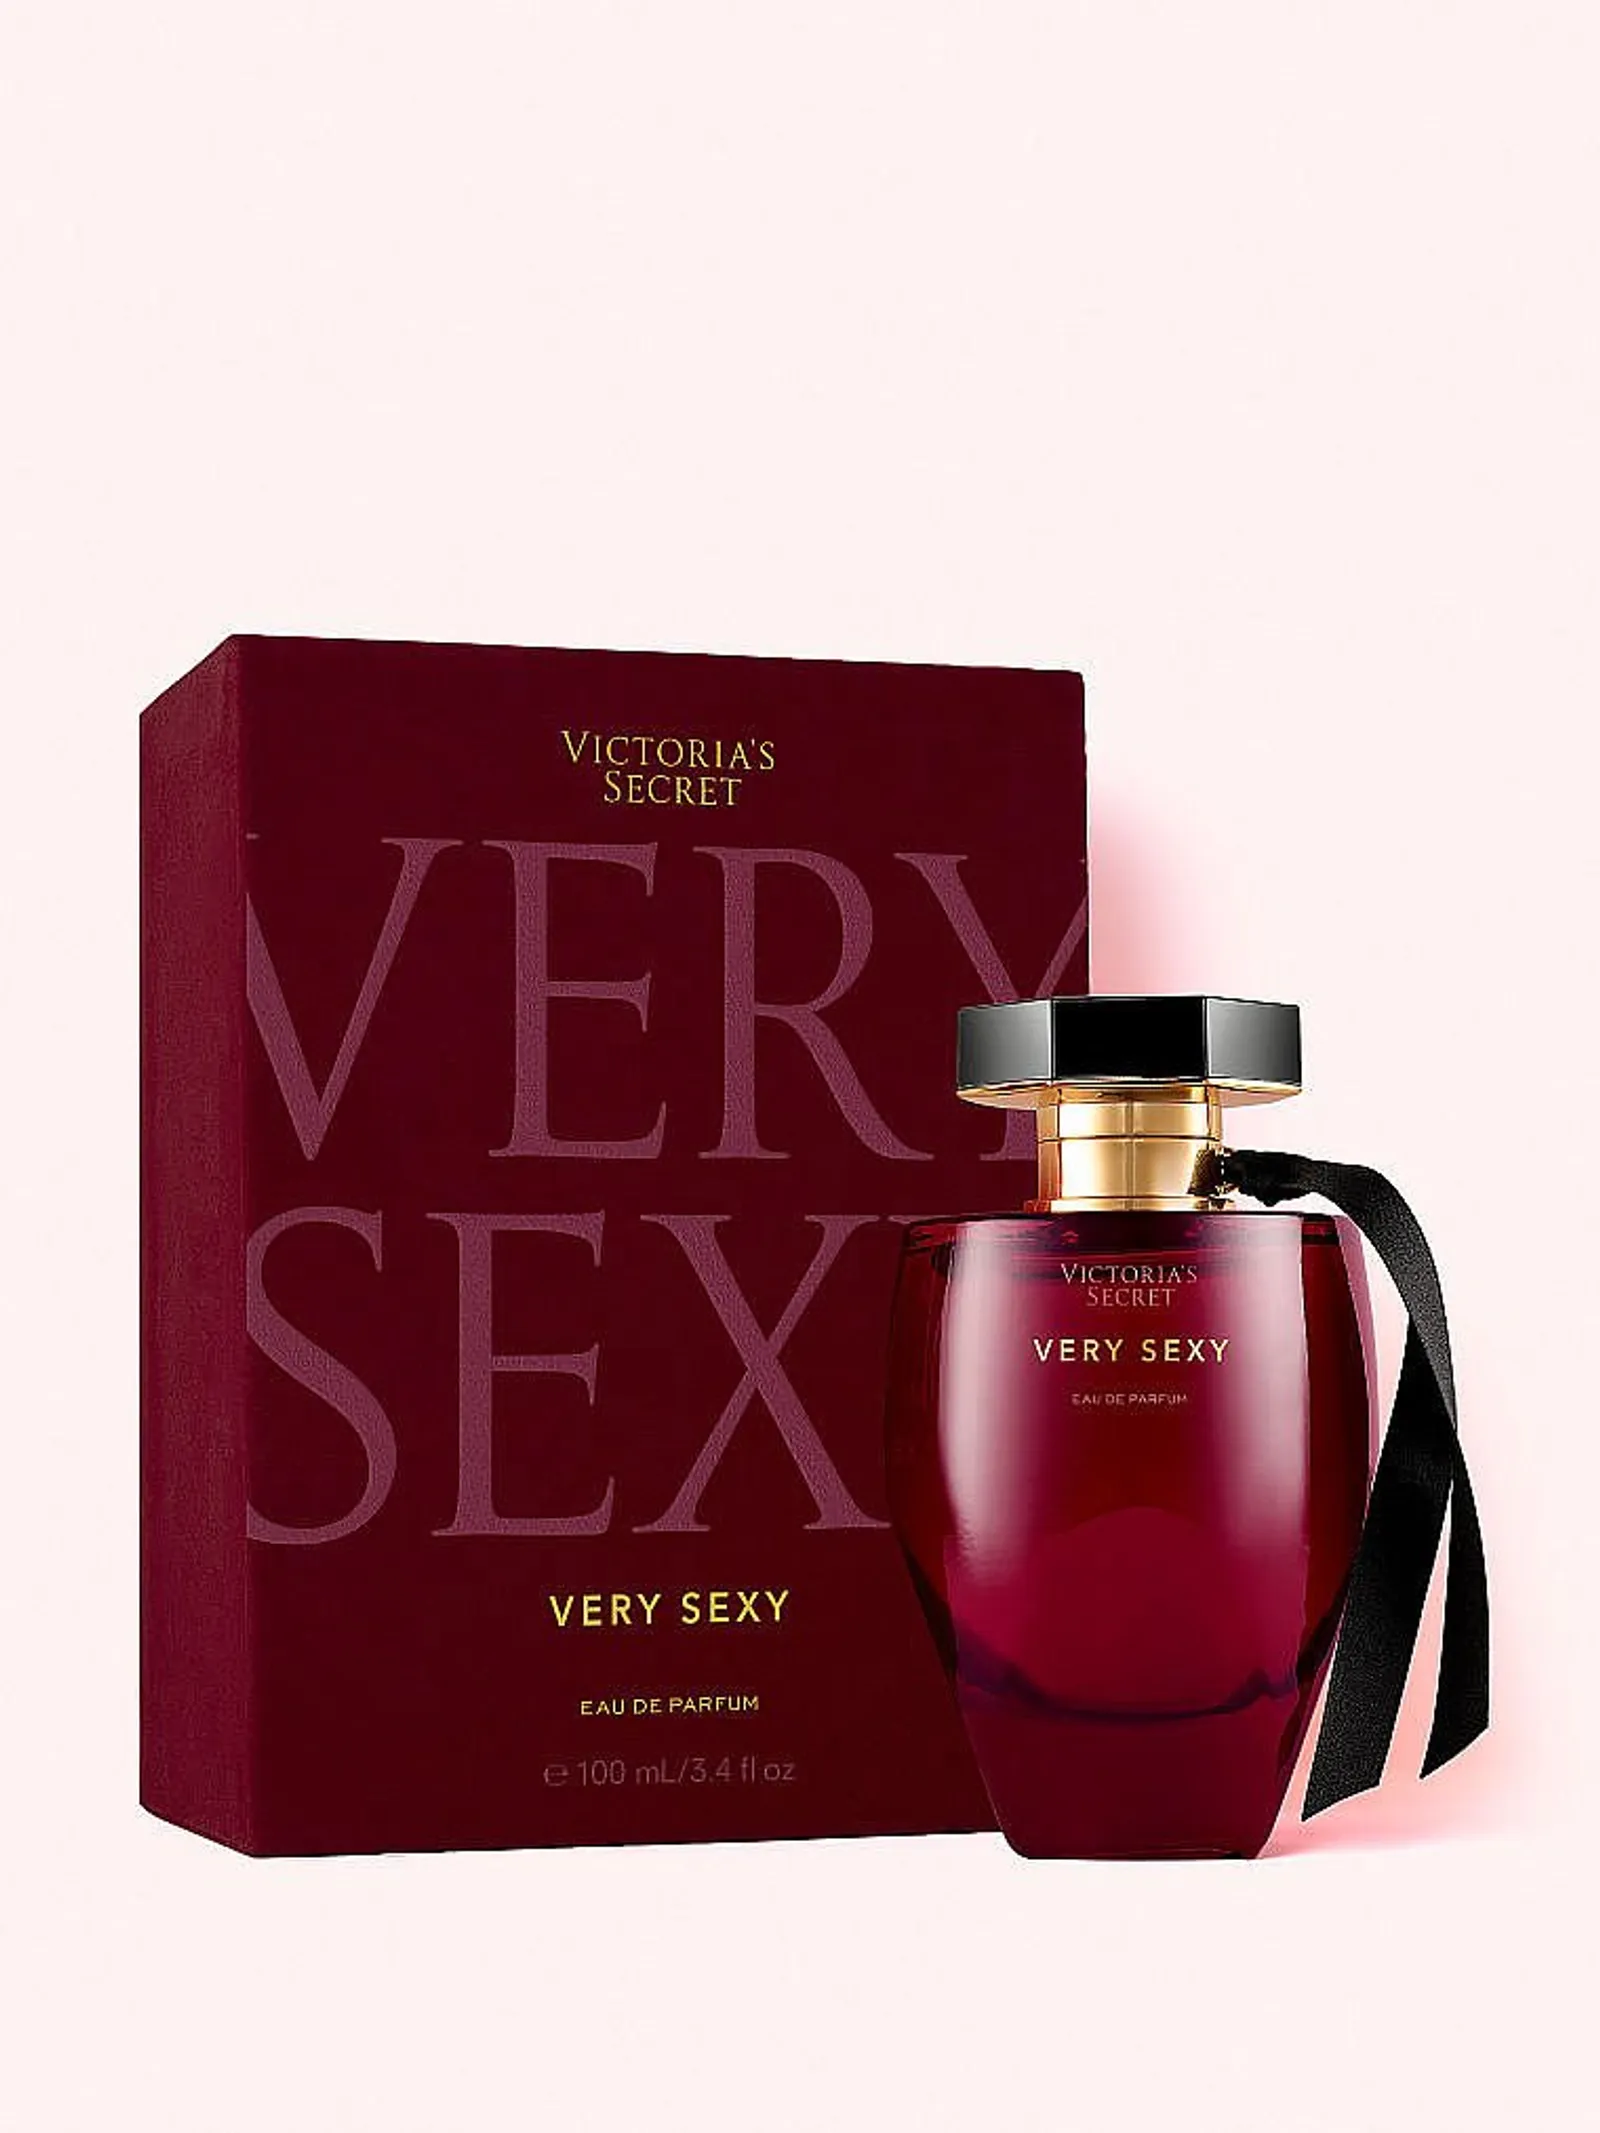 10 Rekomendasi Parfum Victoria's Secret yang Paling Wangi